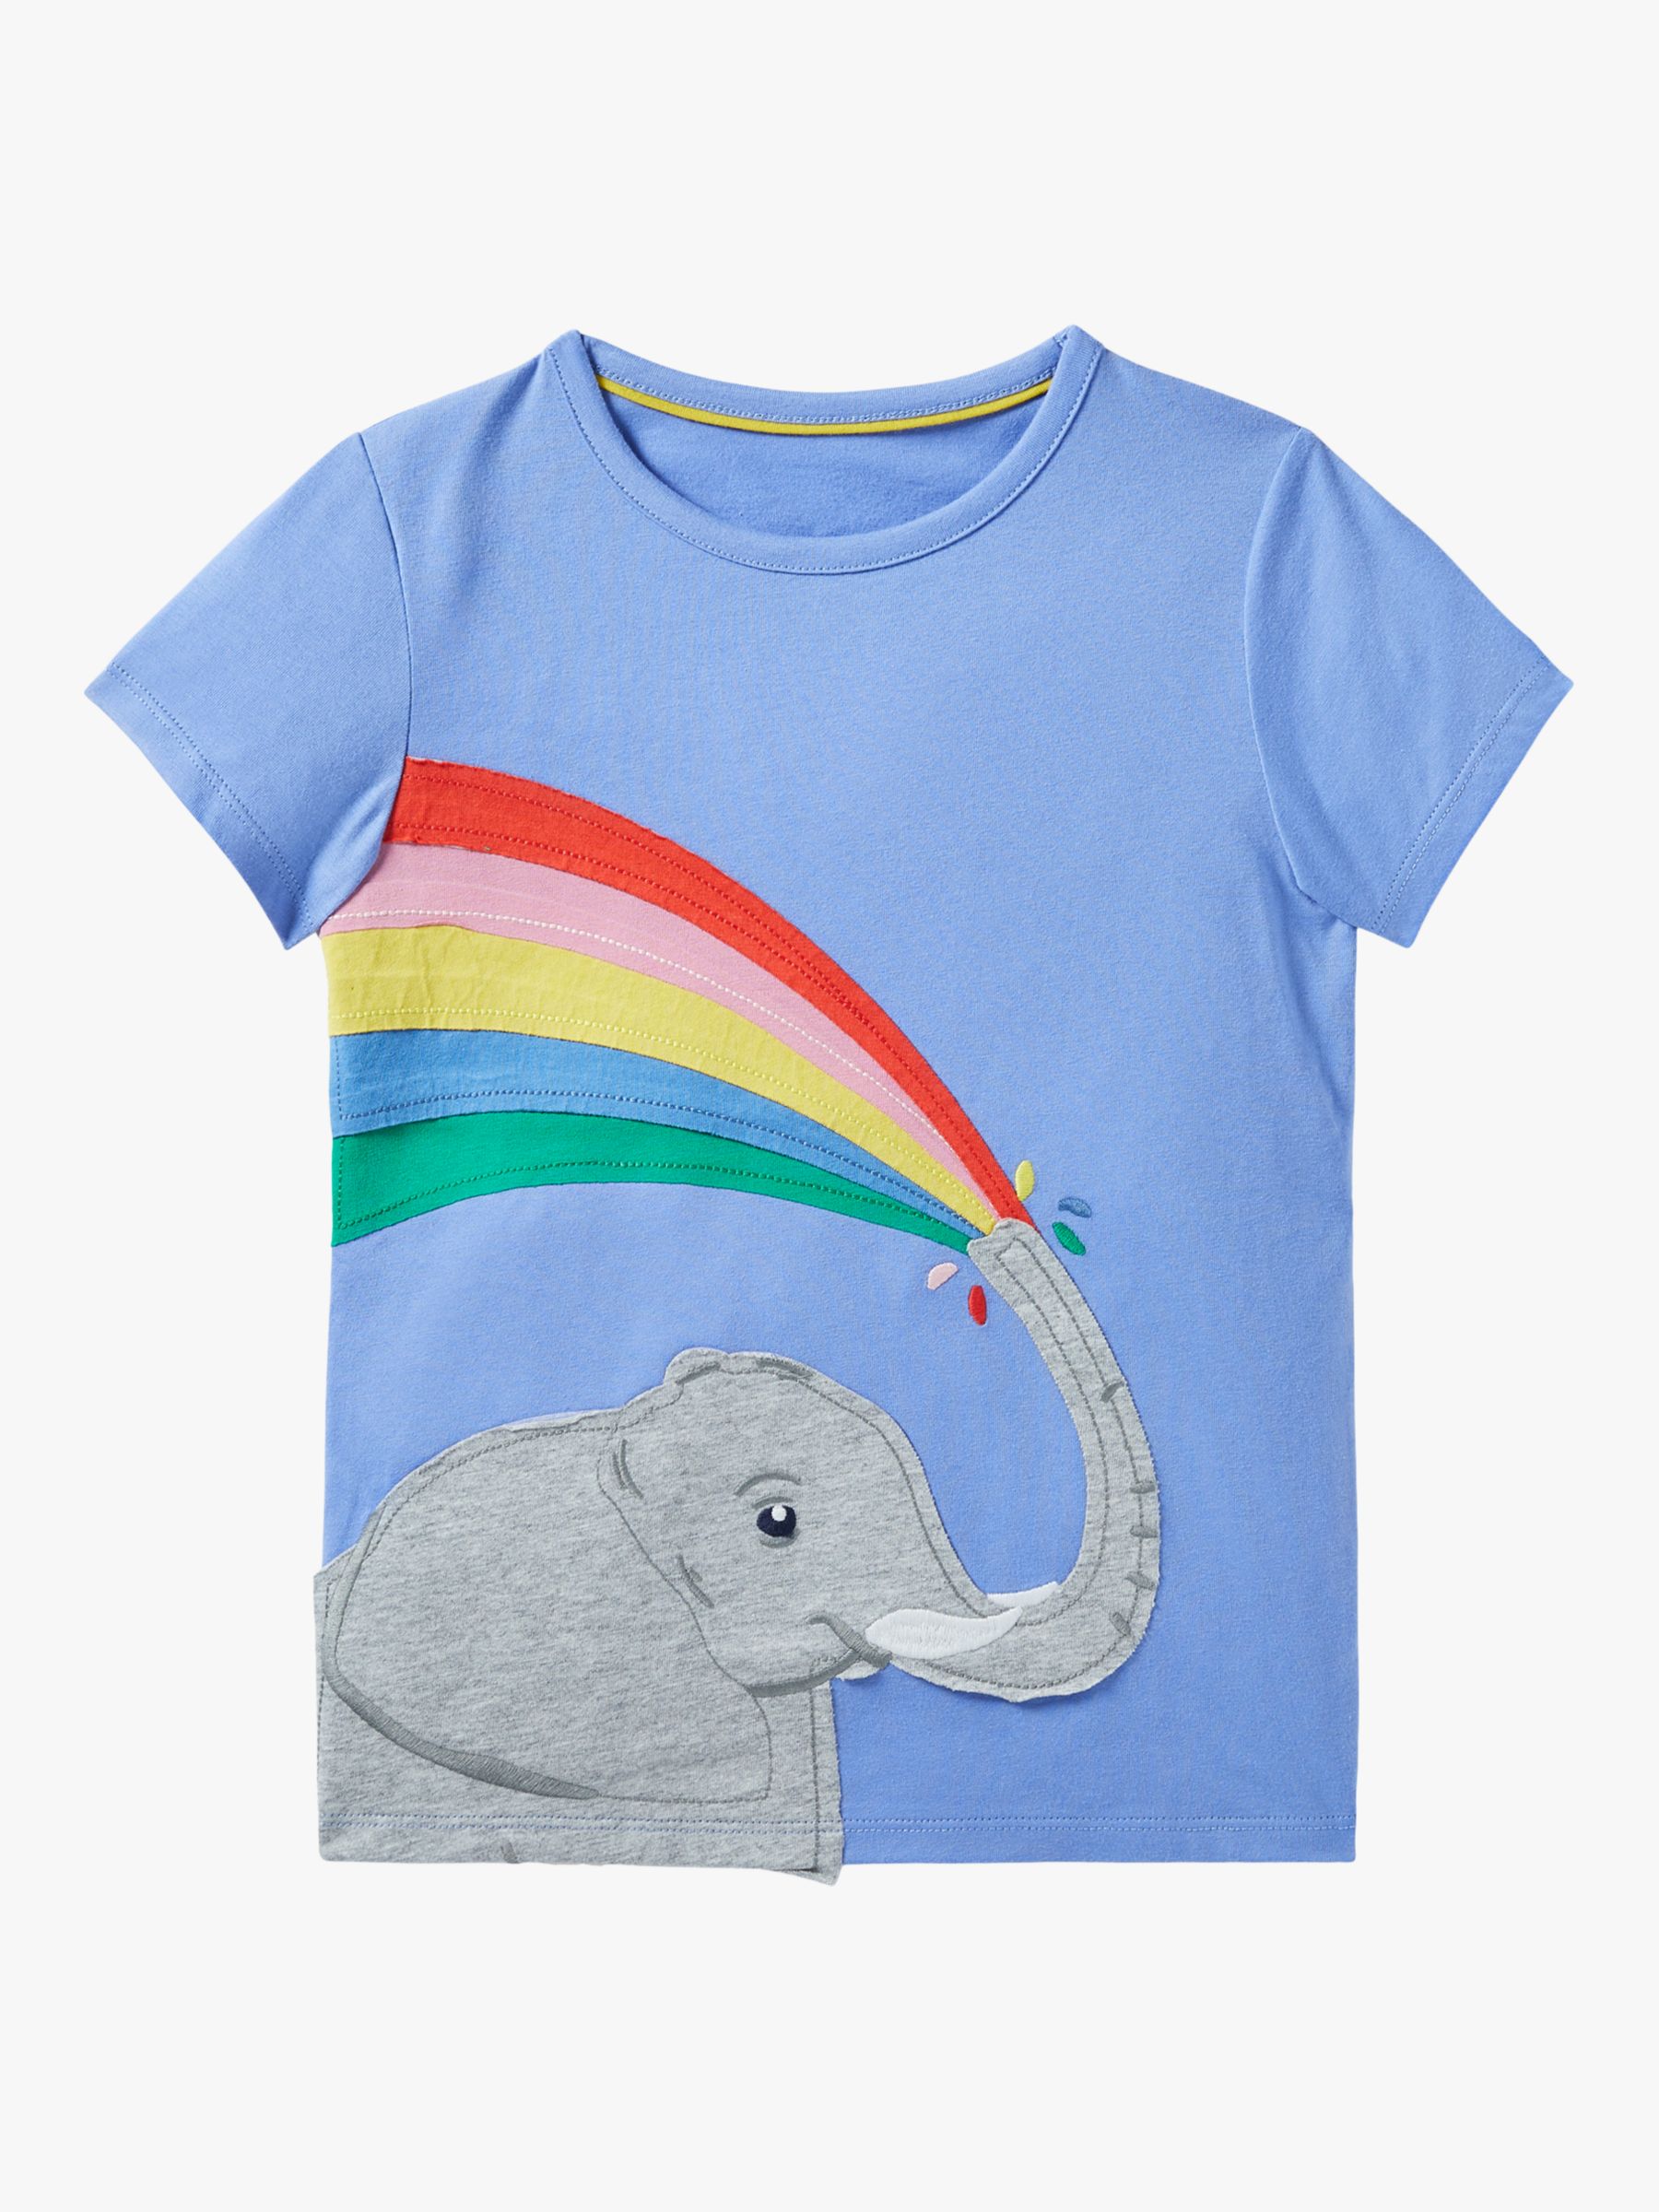 Mini Boden Children's Elephant Rainbow T-Shirt, Gulf Blue